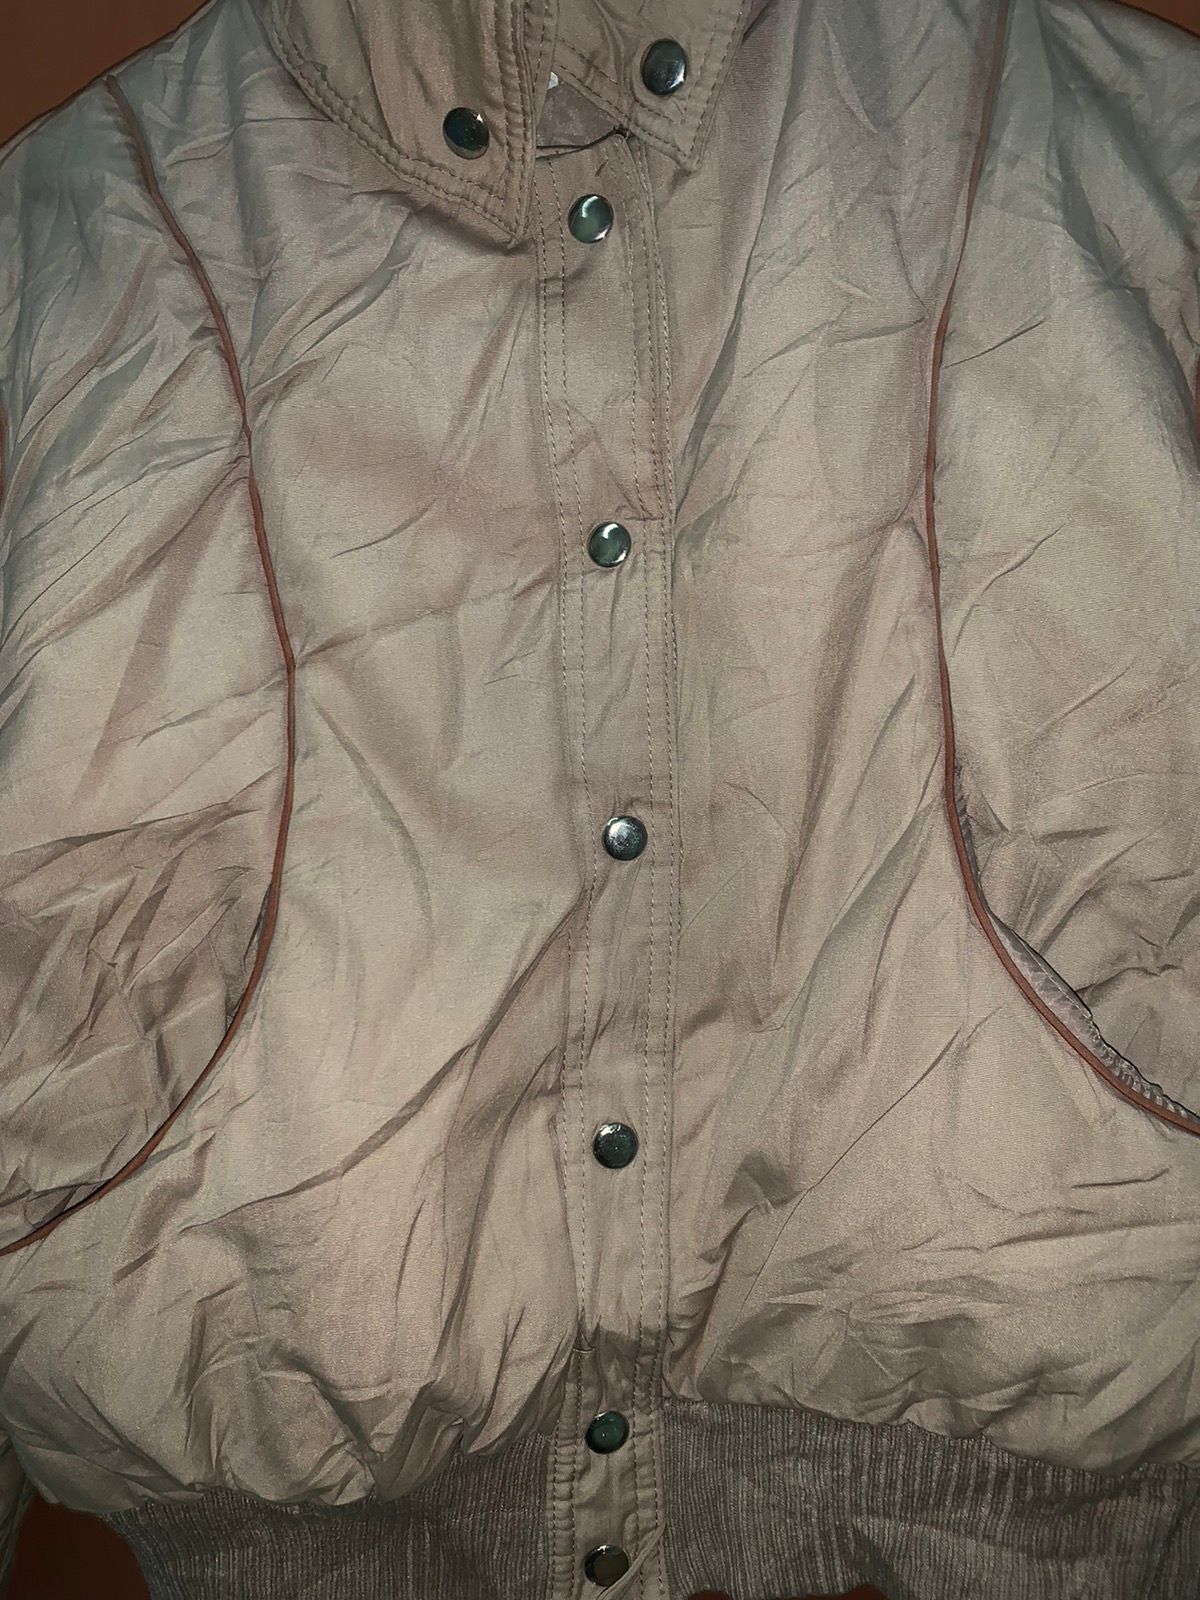 Vintage DC jacket By JC PENNEY RARE!! - 6